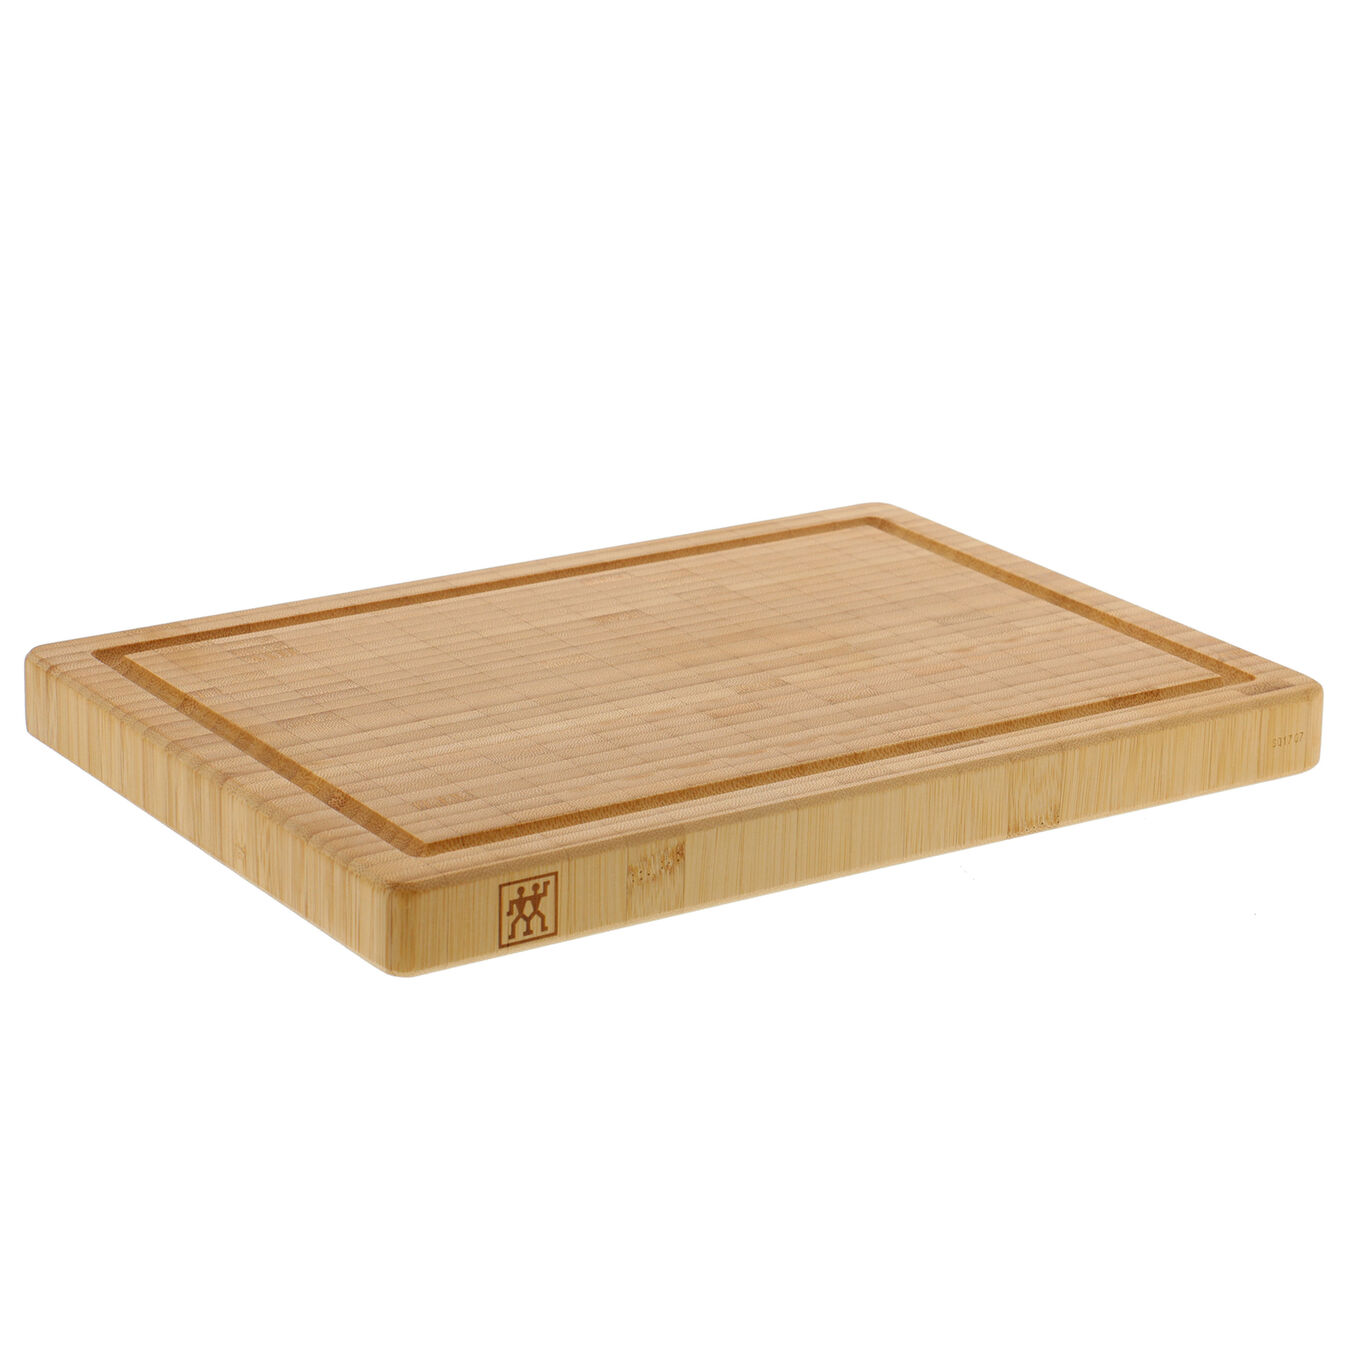 36 cm x 25 cm Bamboo Chopping board,,large 1